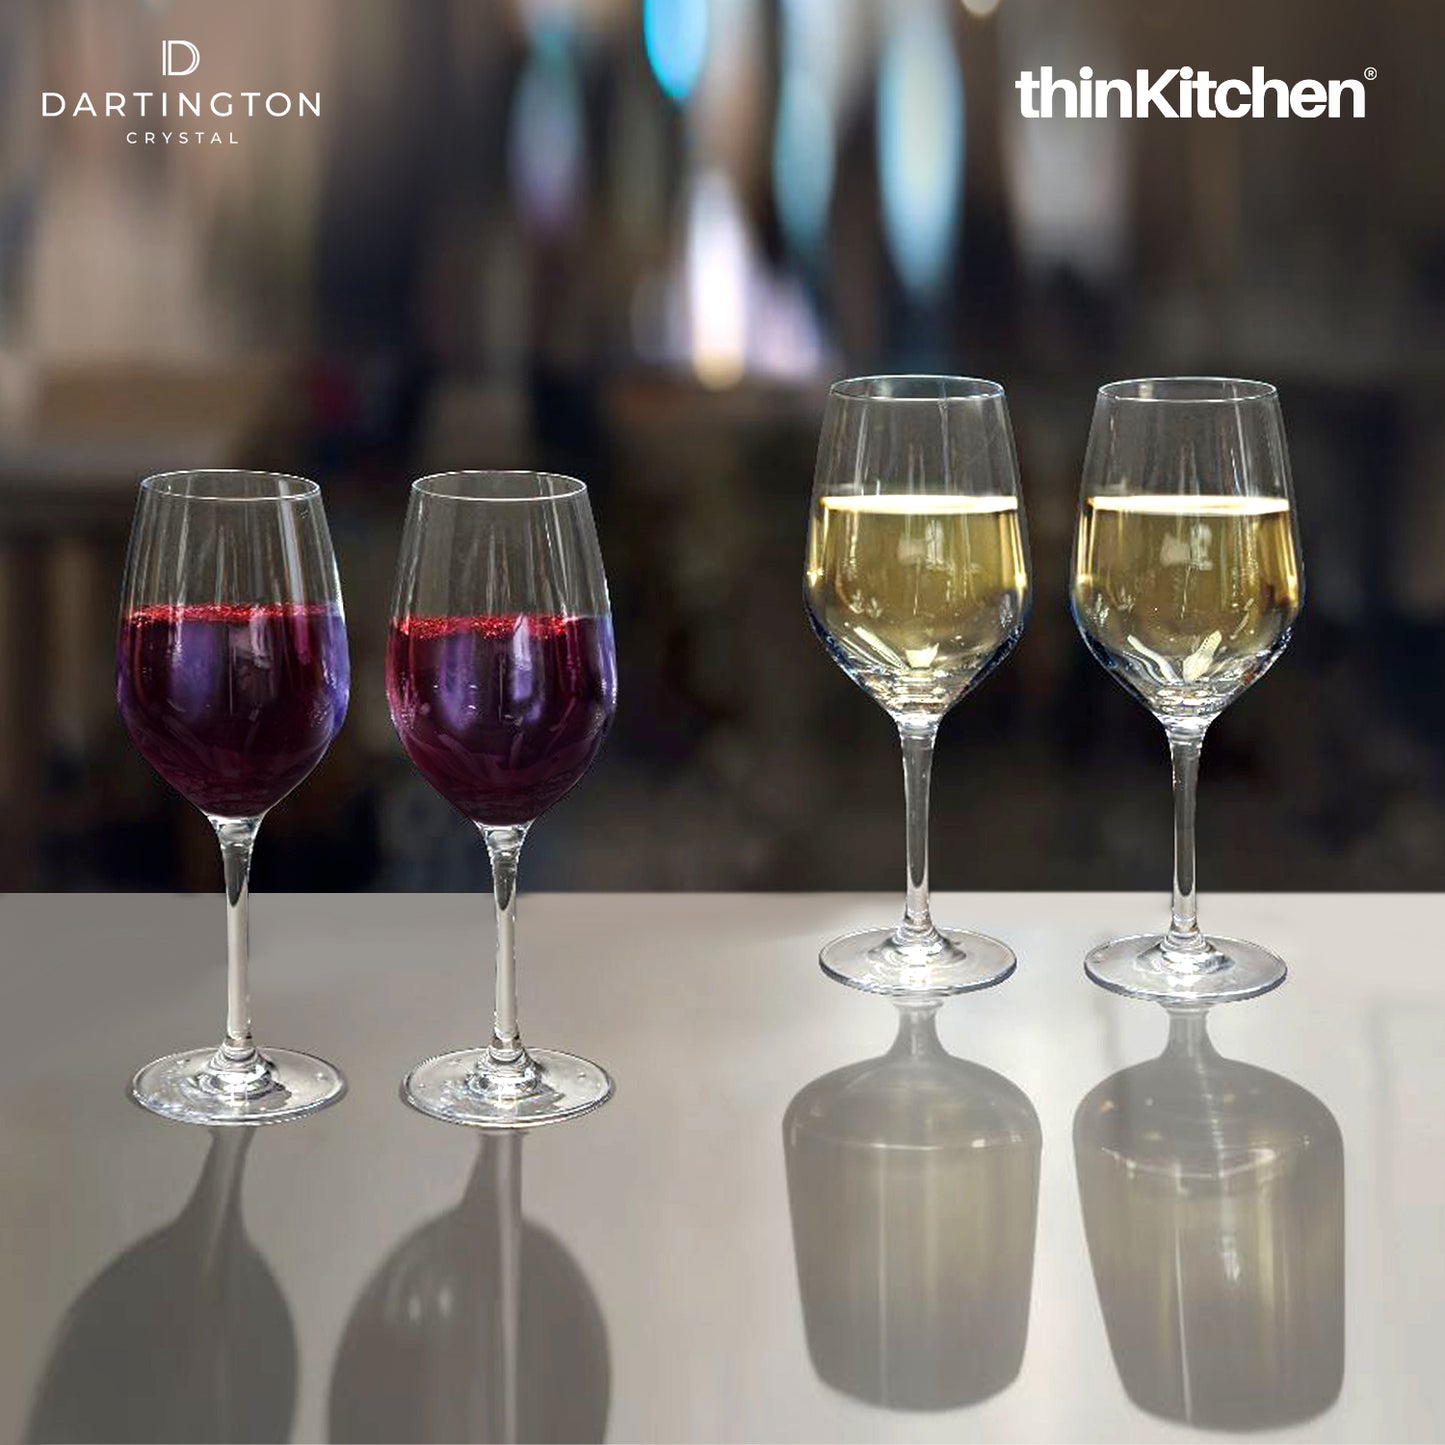 Dartington Set Of Red And White Wine Glasses 4 Pc